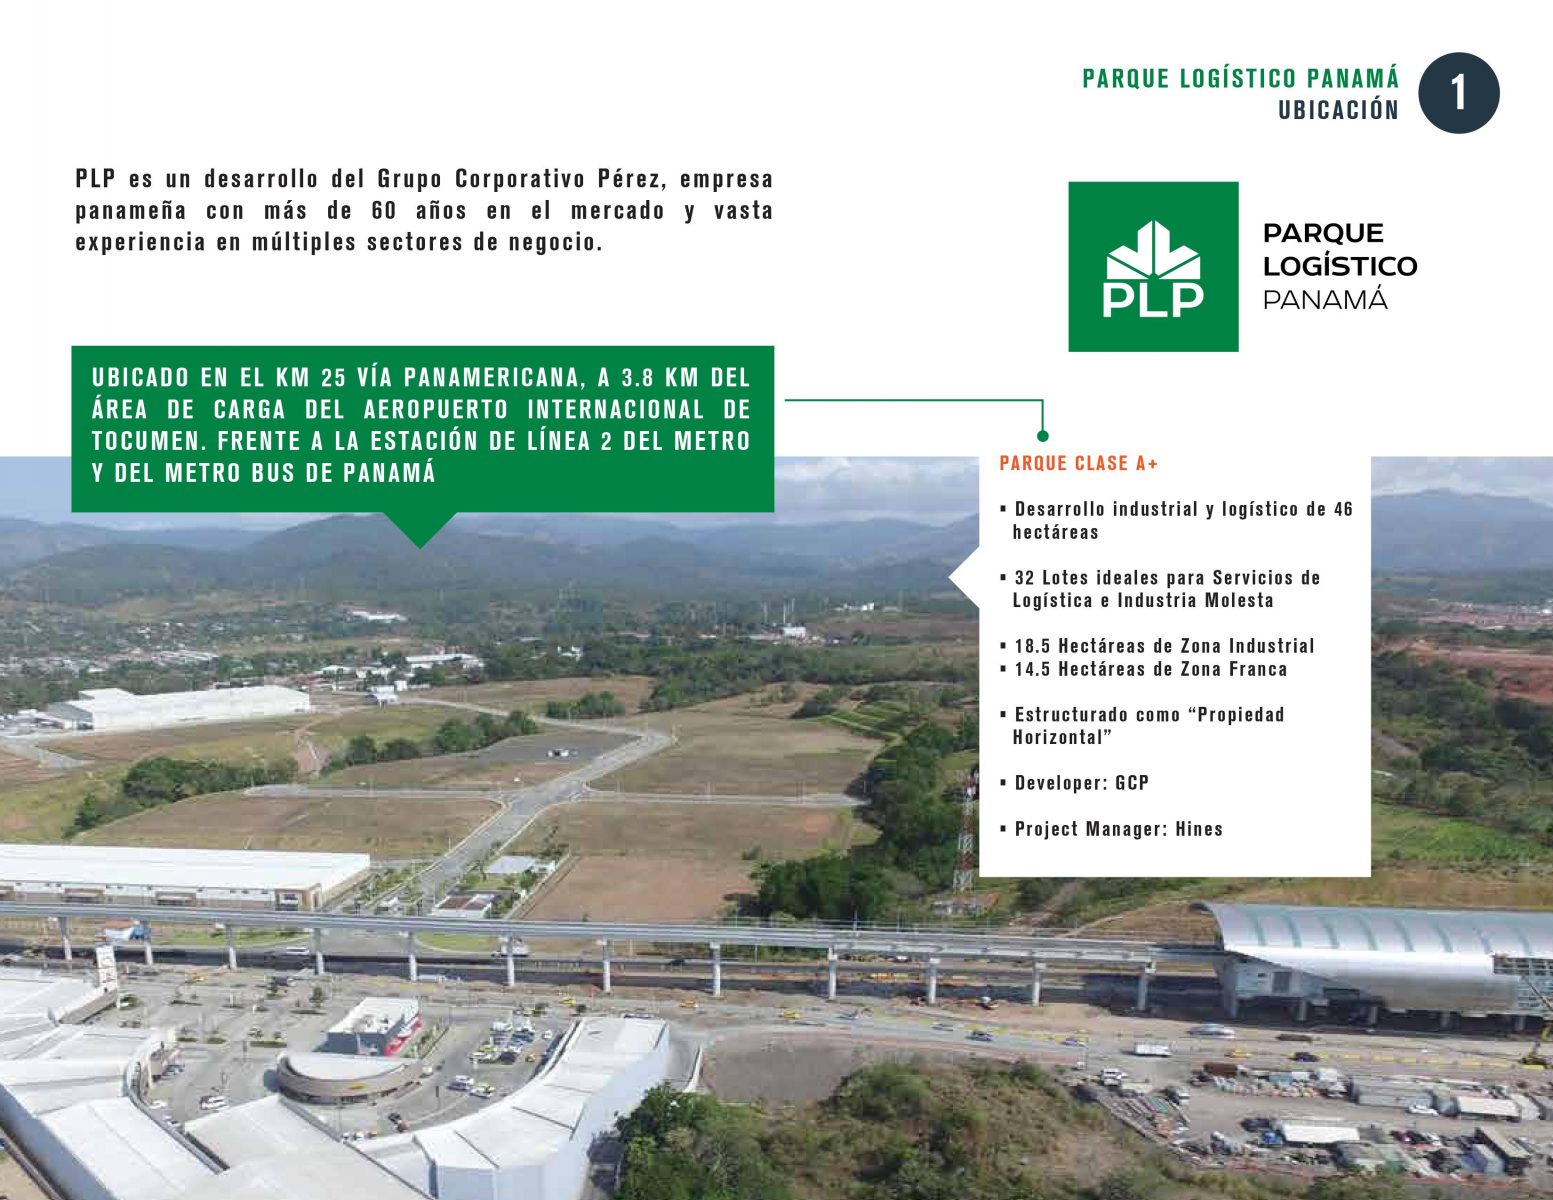 Panama Logistics Park